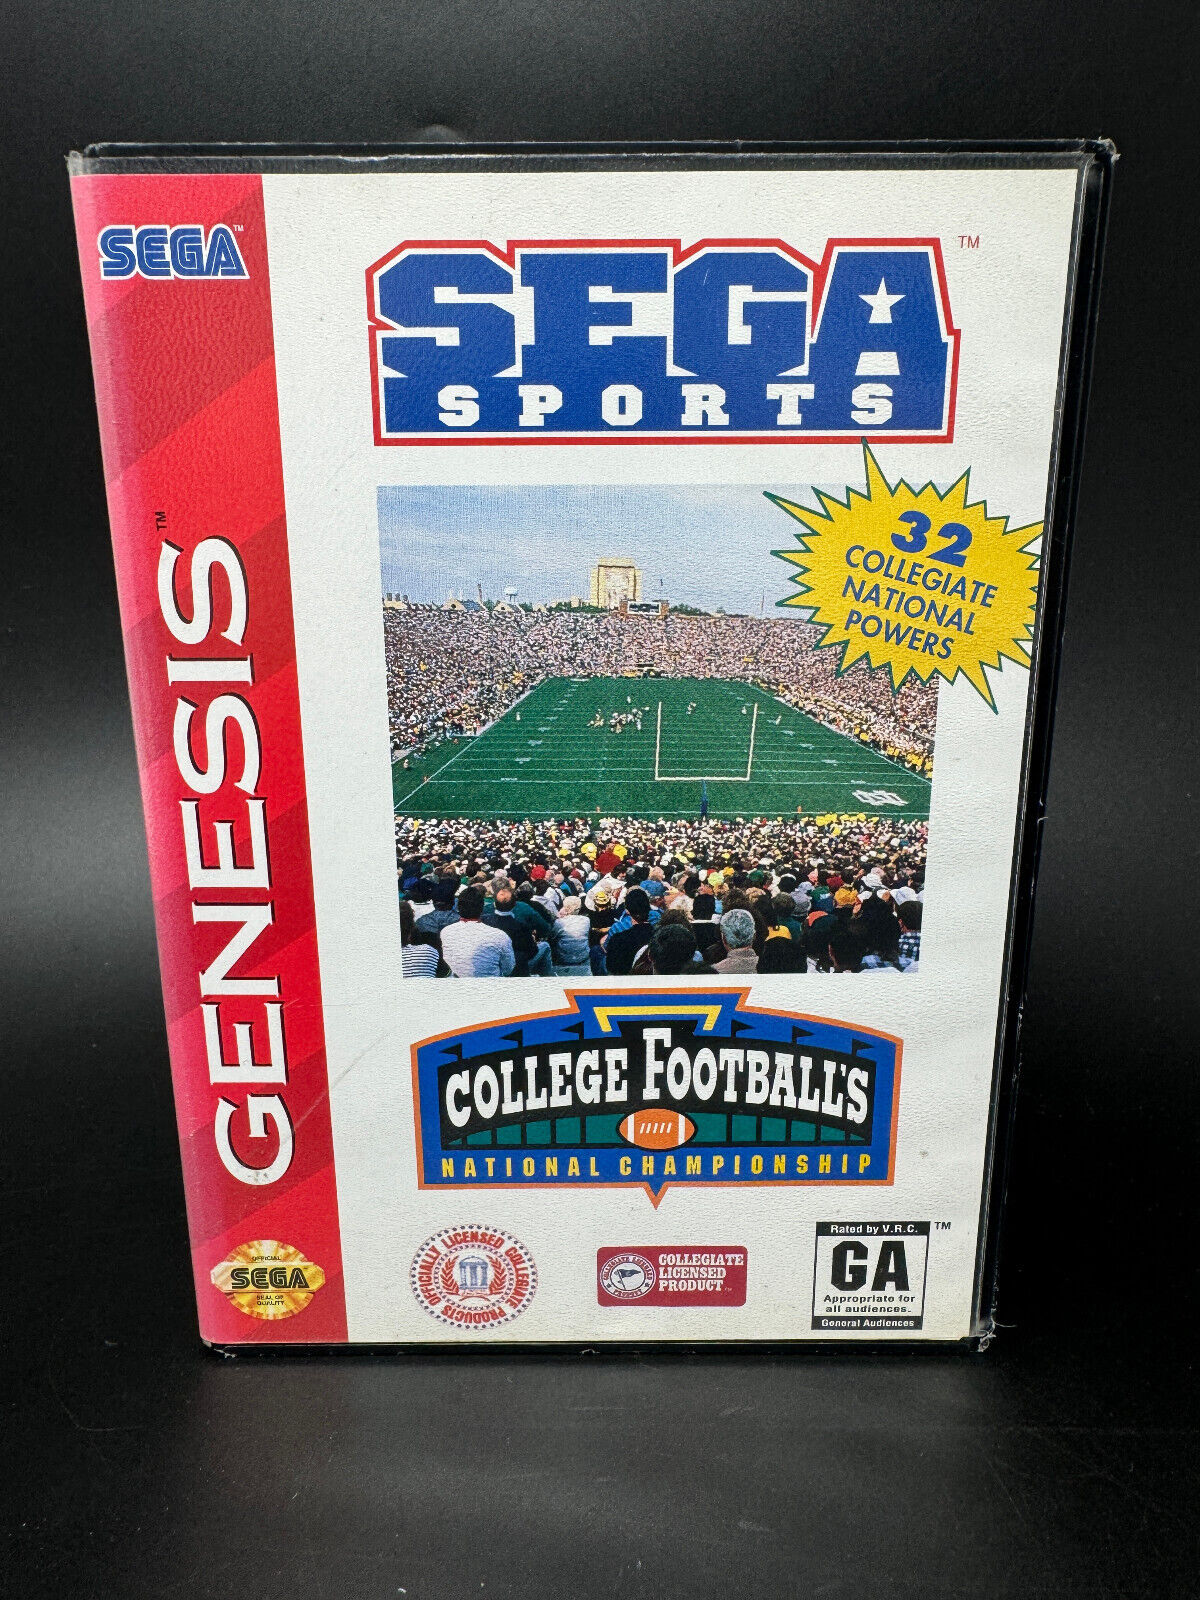 College Football's National Championship (Sega Genesis) *CIB W/ MANUAL - TESTED*